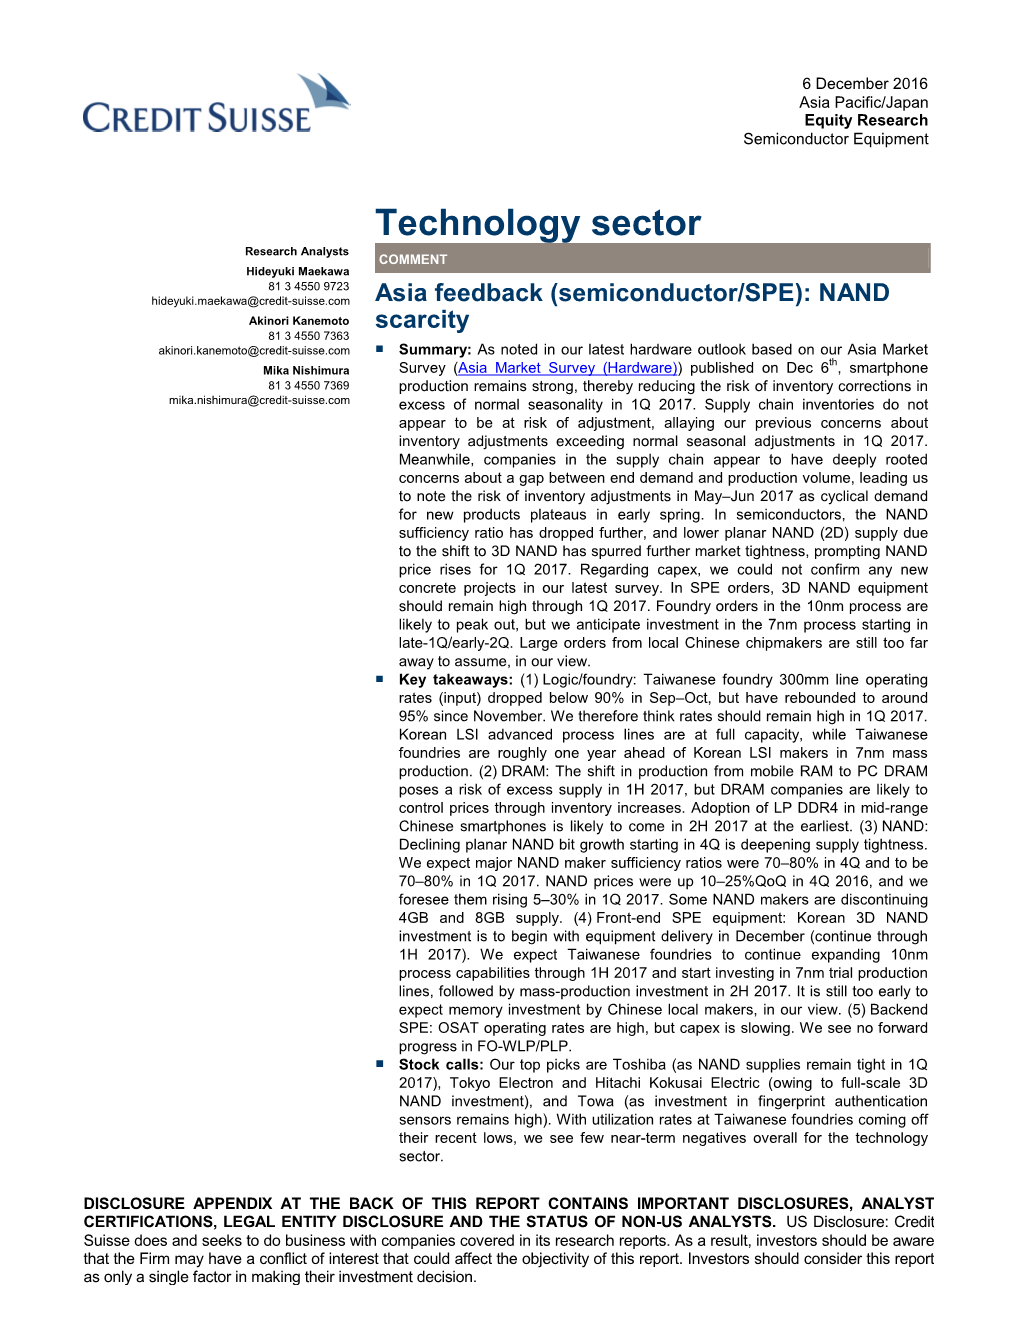 Technology Sector